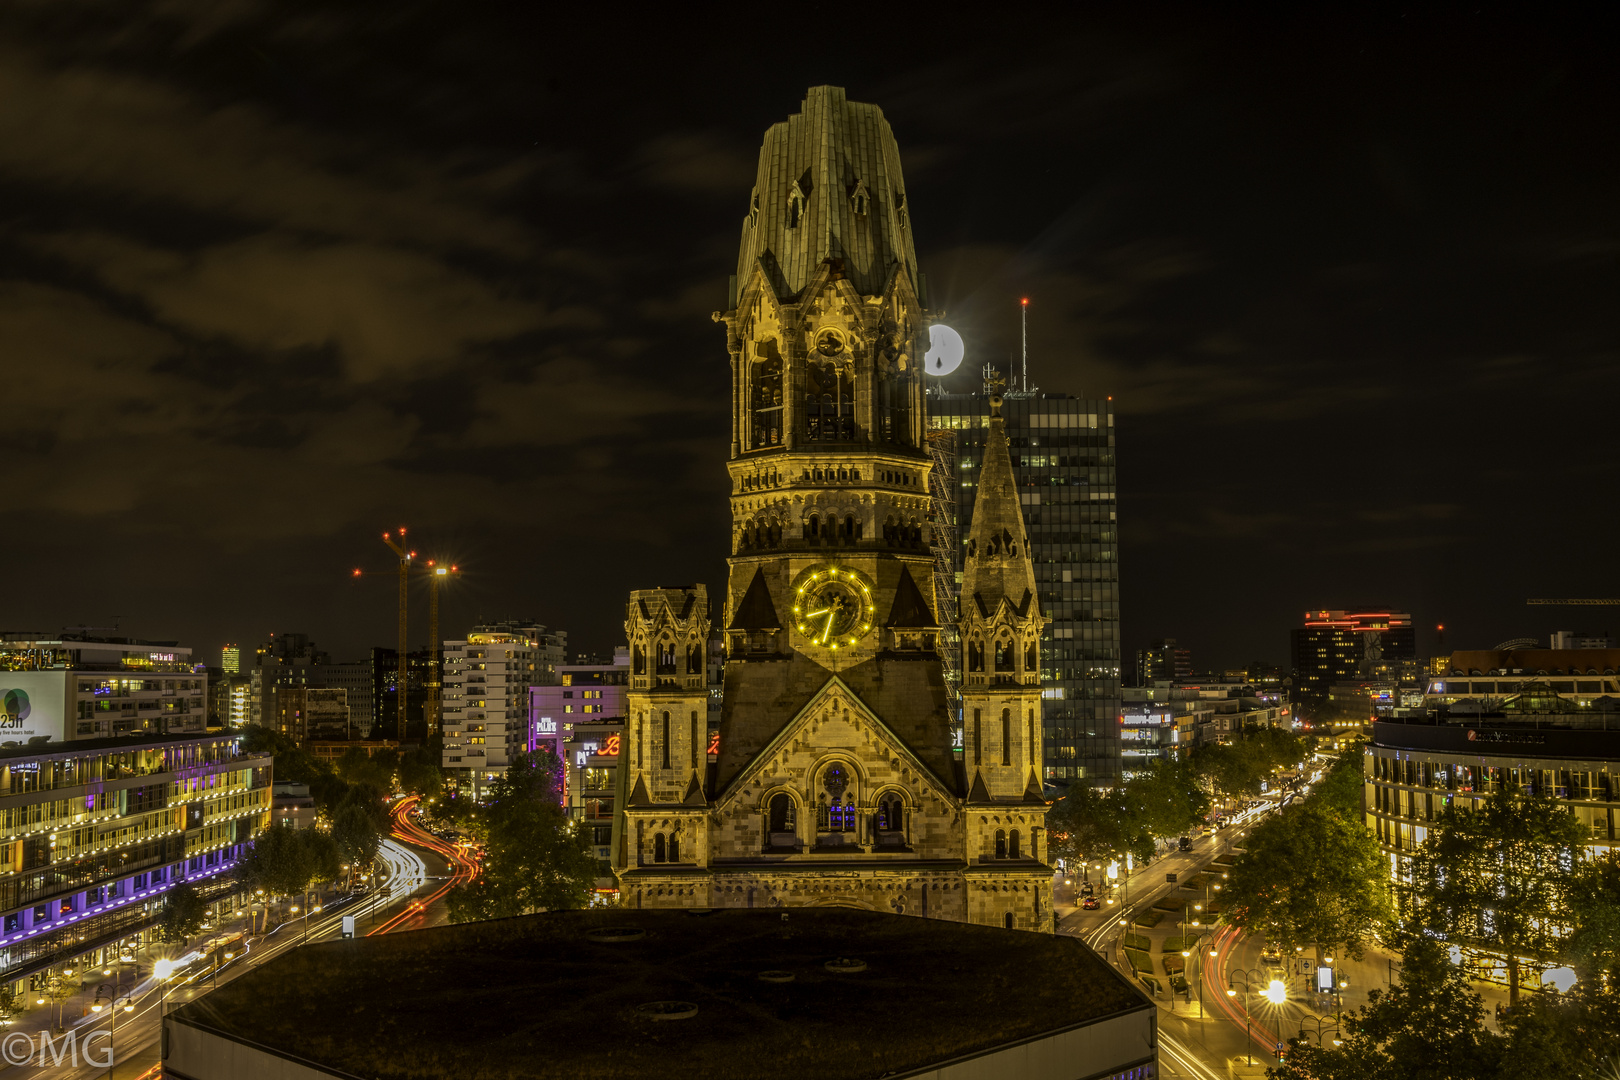 Nacht Lichter an der Gedächtnis Kirche in Berlin